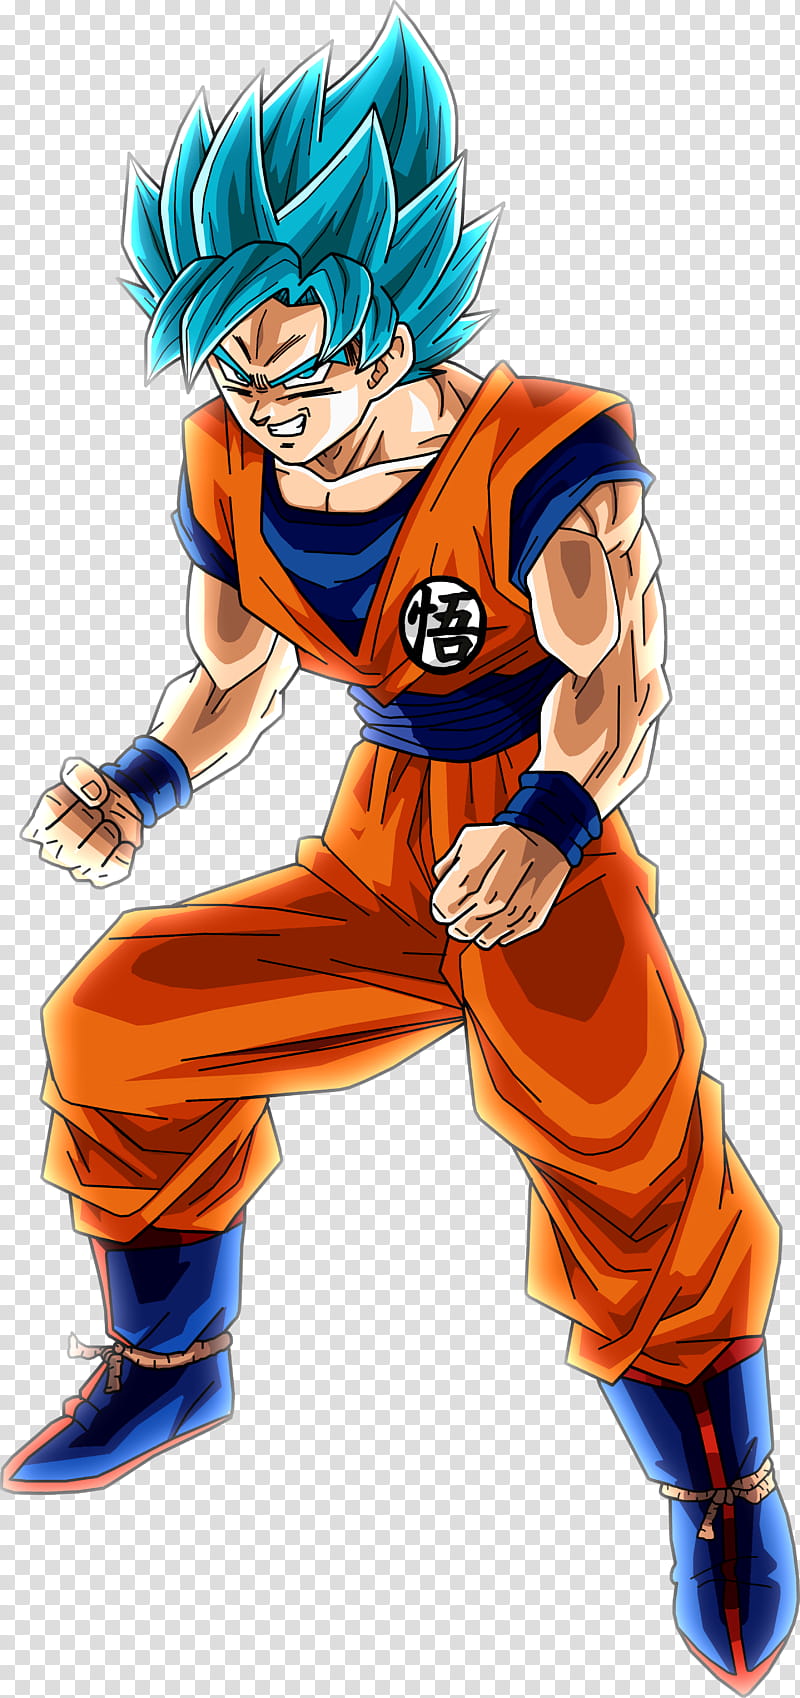 Super Saiyan Goku Super Saiyan Blue Alt Palette transparent background PNG clipart